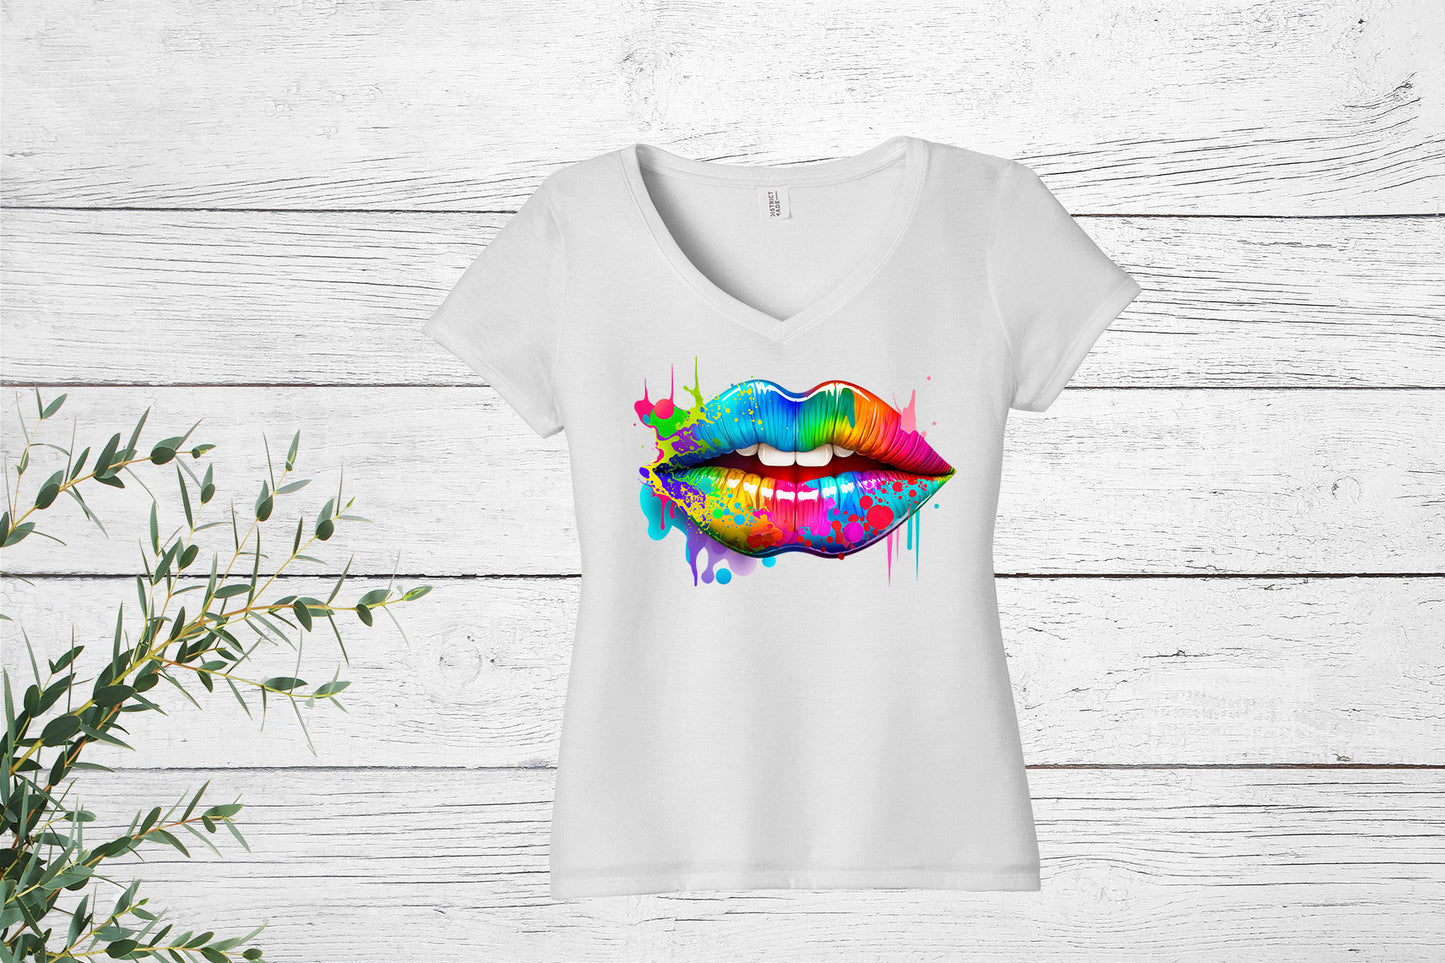 Colorful Lips Design, Ladies T-Shirt, Ladies short sleeve white Tee